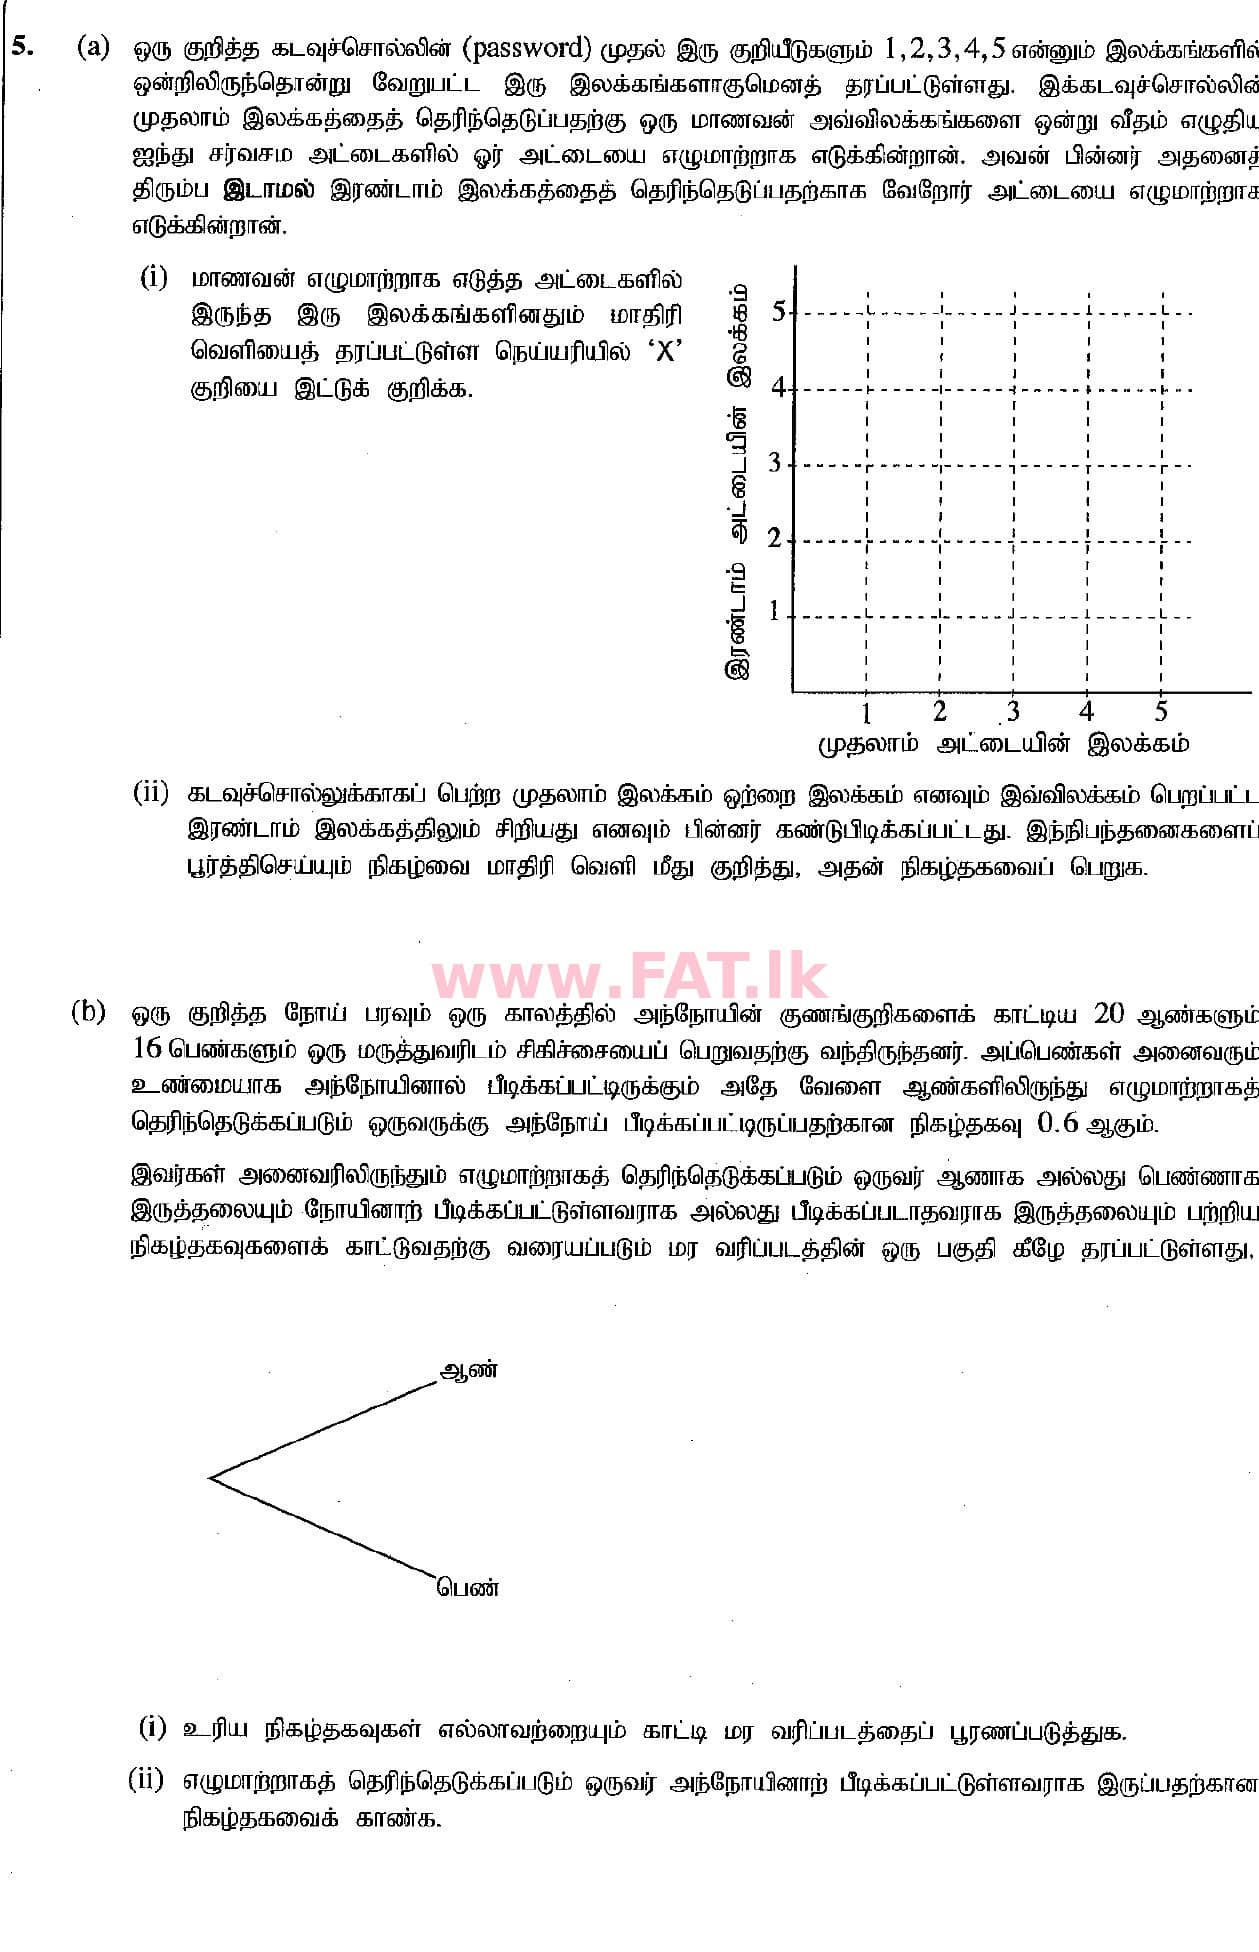 National Syllabus : Ordinary Level (O/L) Mathematics - 2019 December - Paper I (தமிழ் Medium) 30 1